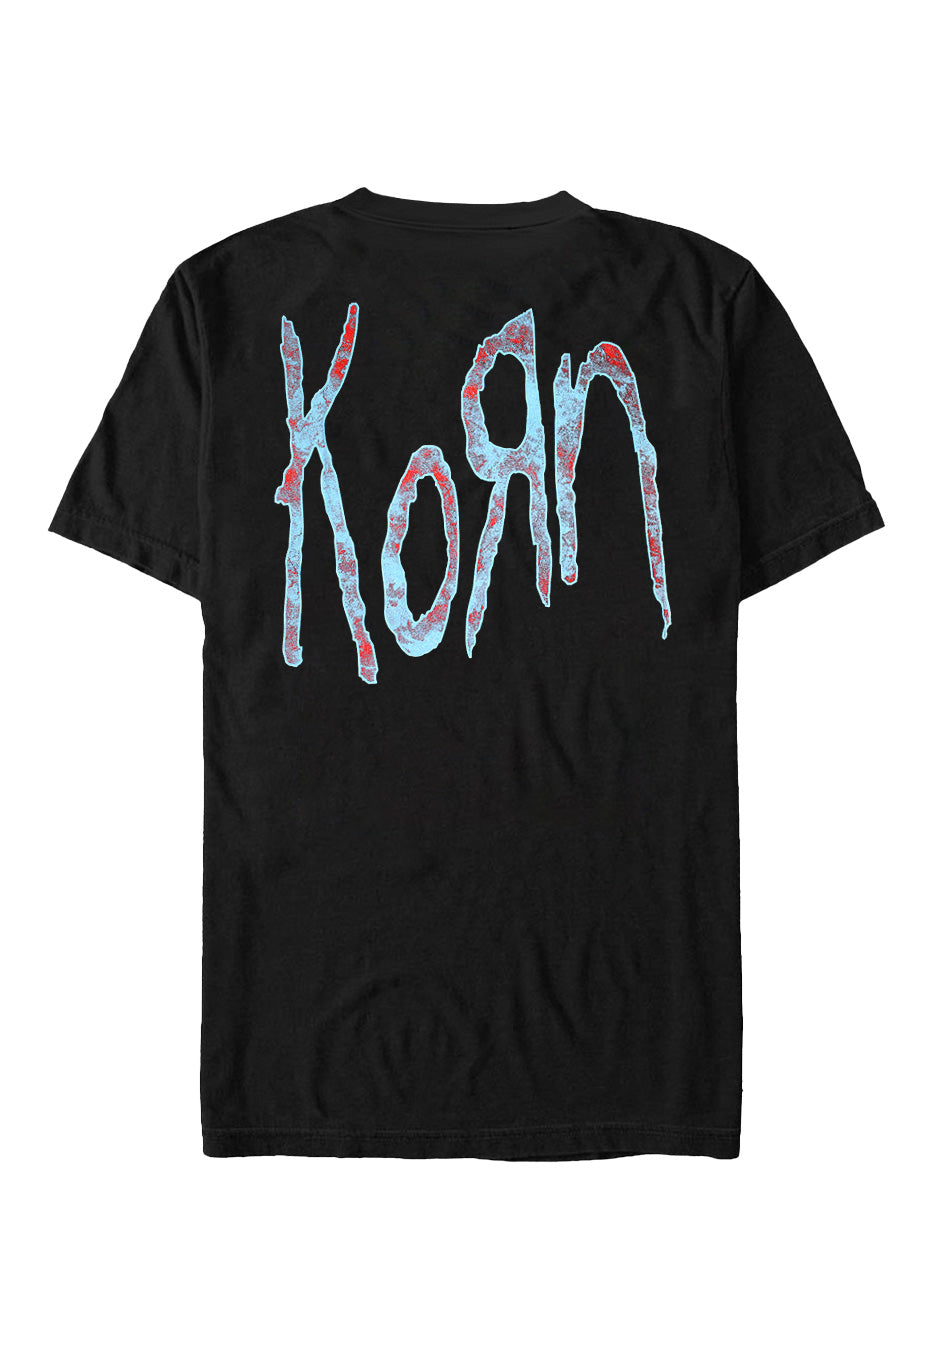 Korn - SoS Doll - T-Shirt